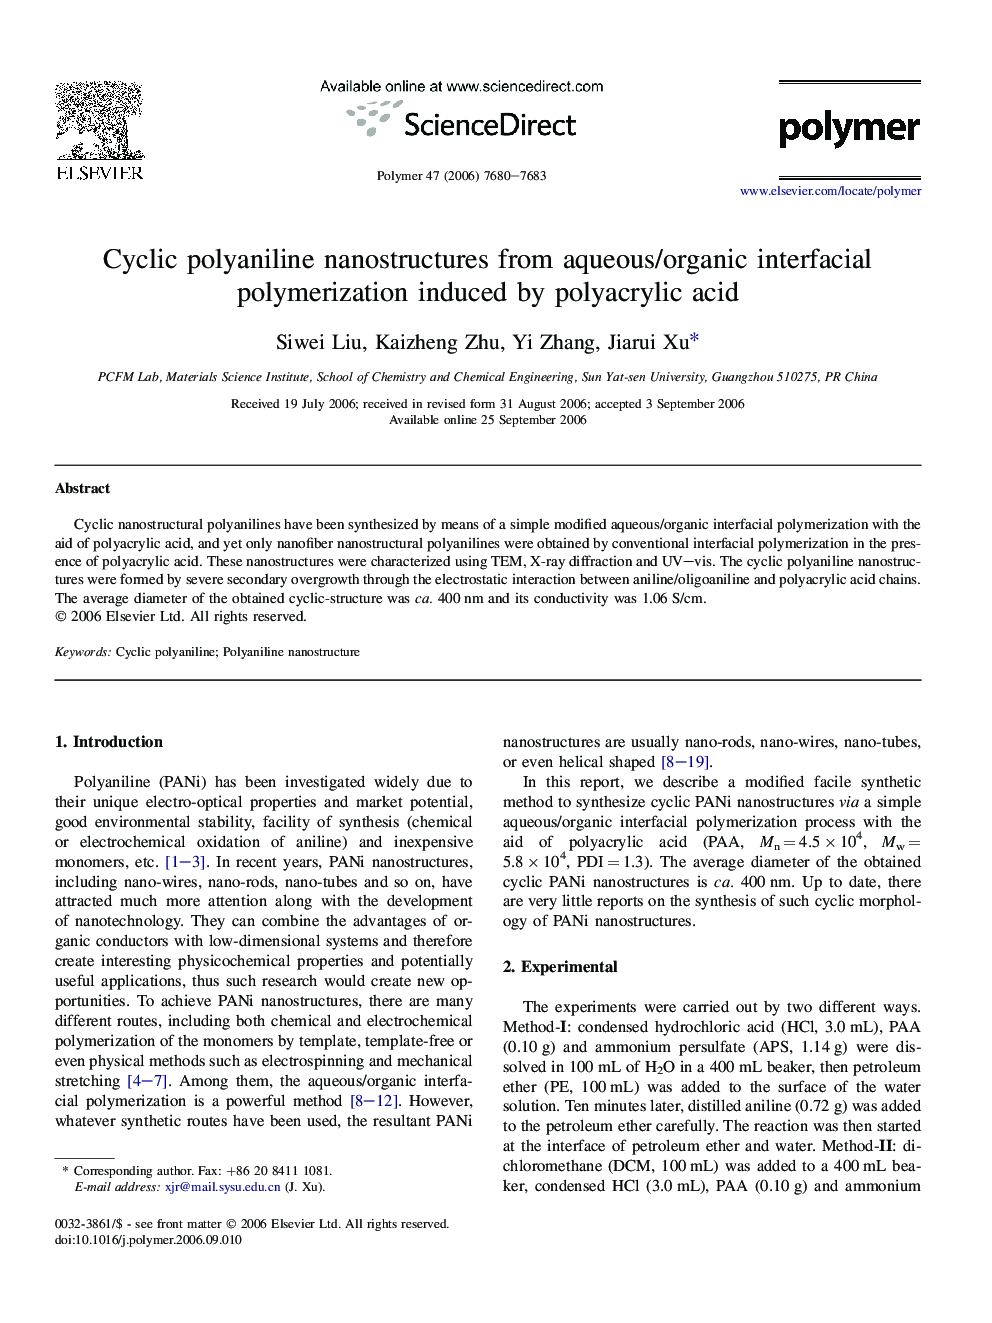 Cyclic polyaniline nanostructures from aqueous/organic interfacial polymerization induced by polyacrylic acid